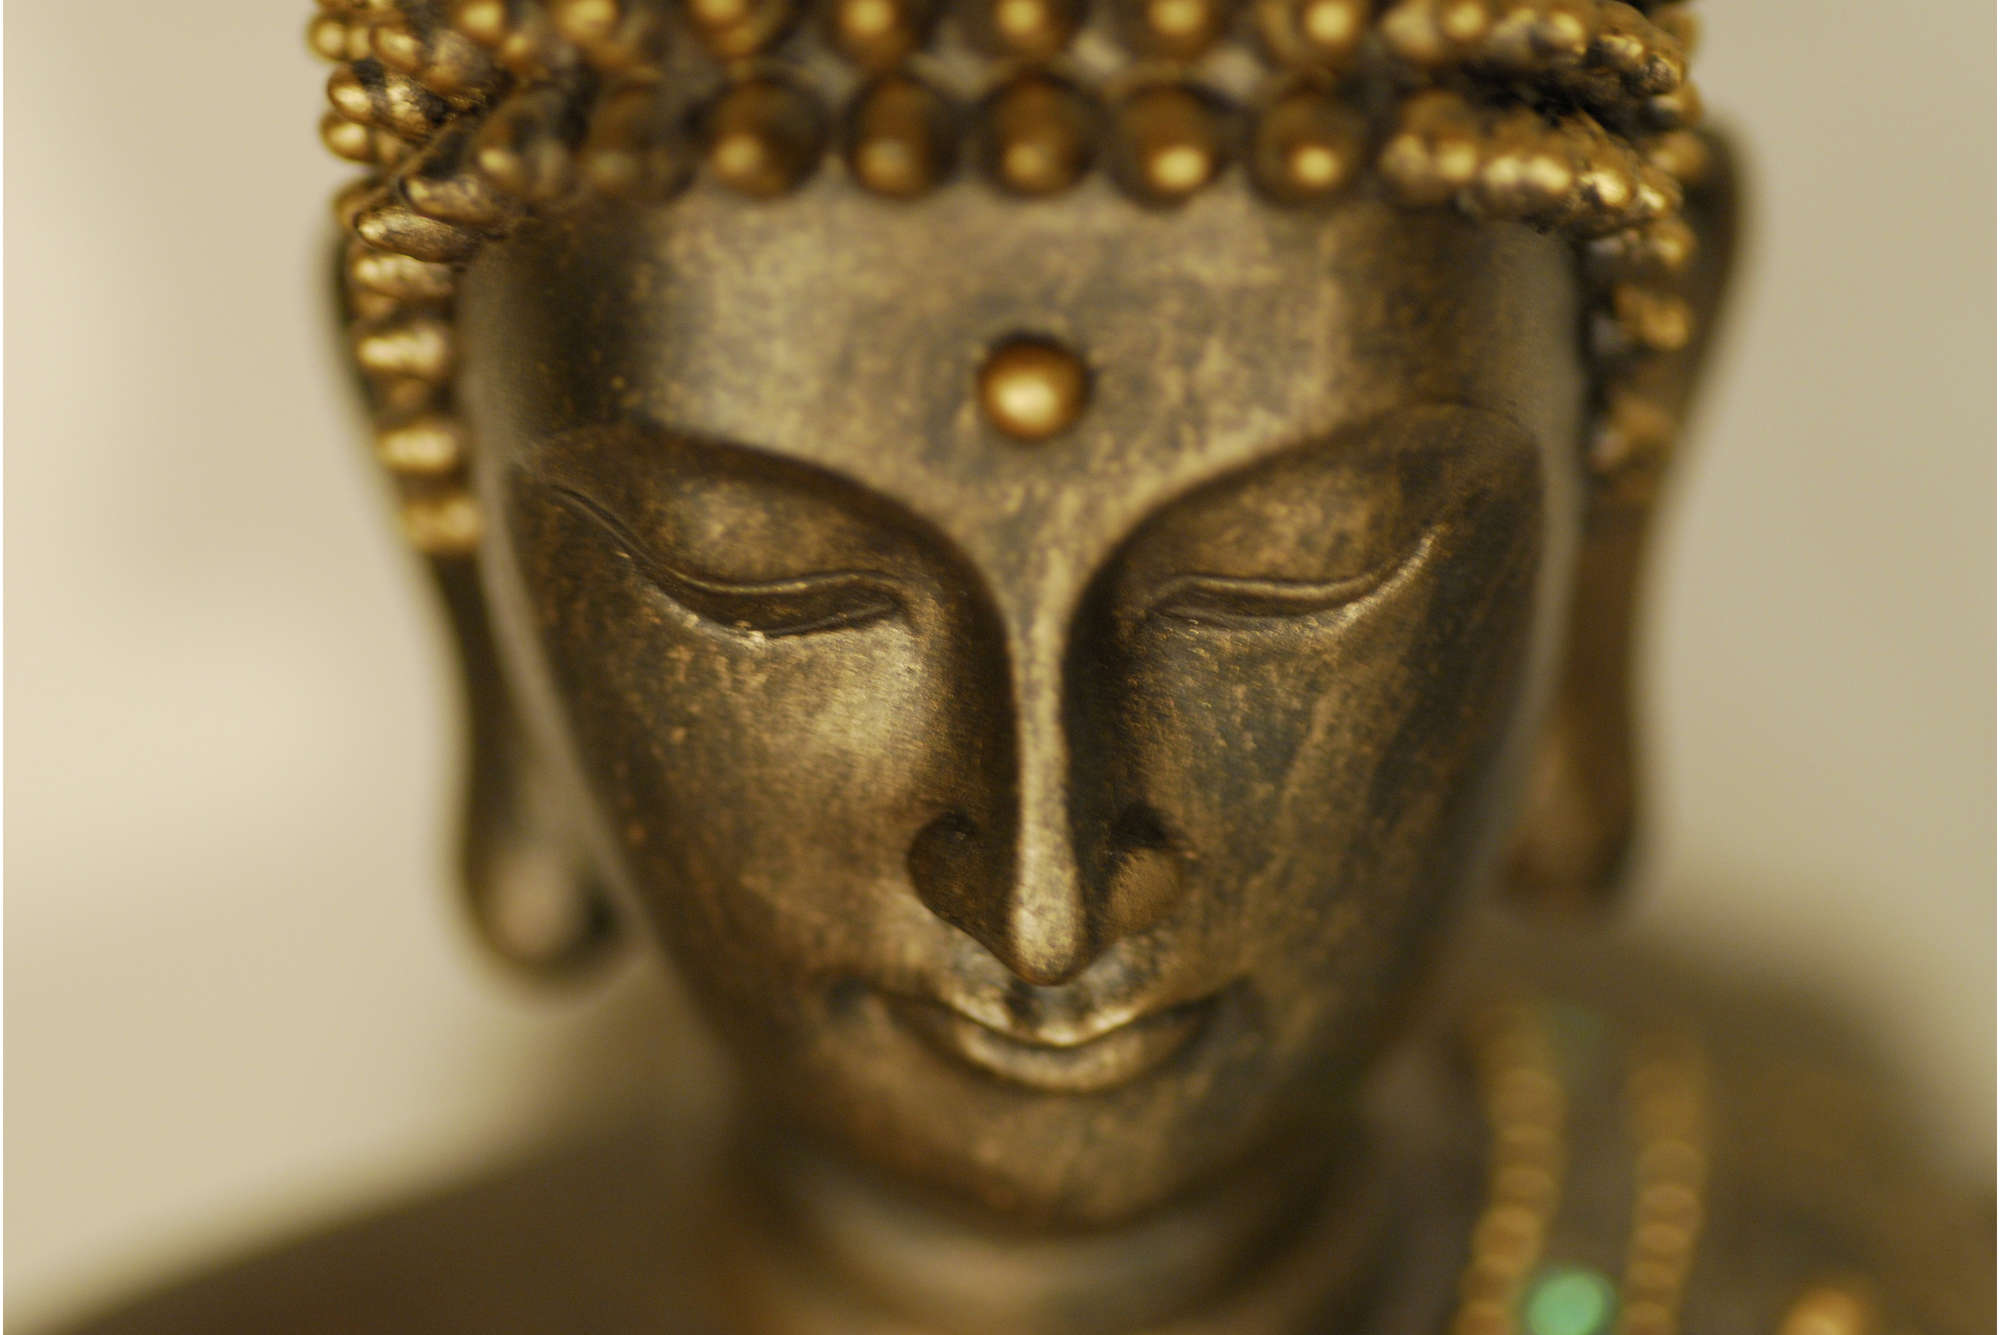             Fototapete Nahaufnahme von Buddha-Figur – Perlmutt Glattvlies
        